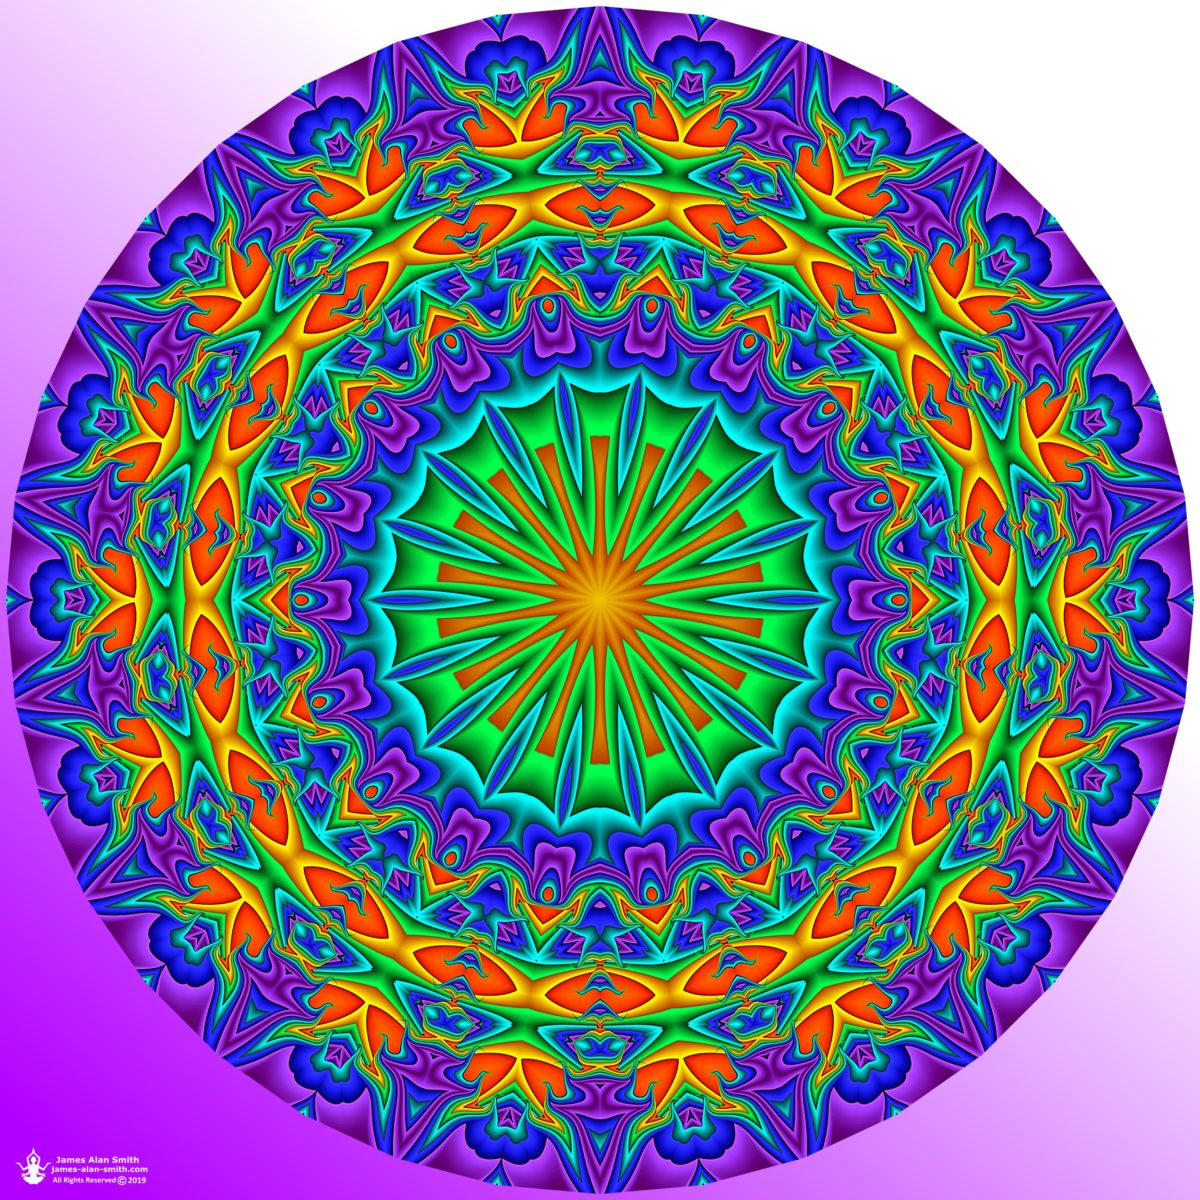 Luminous Moments Mandala: Artwork by James Alan Smith